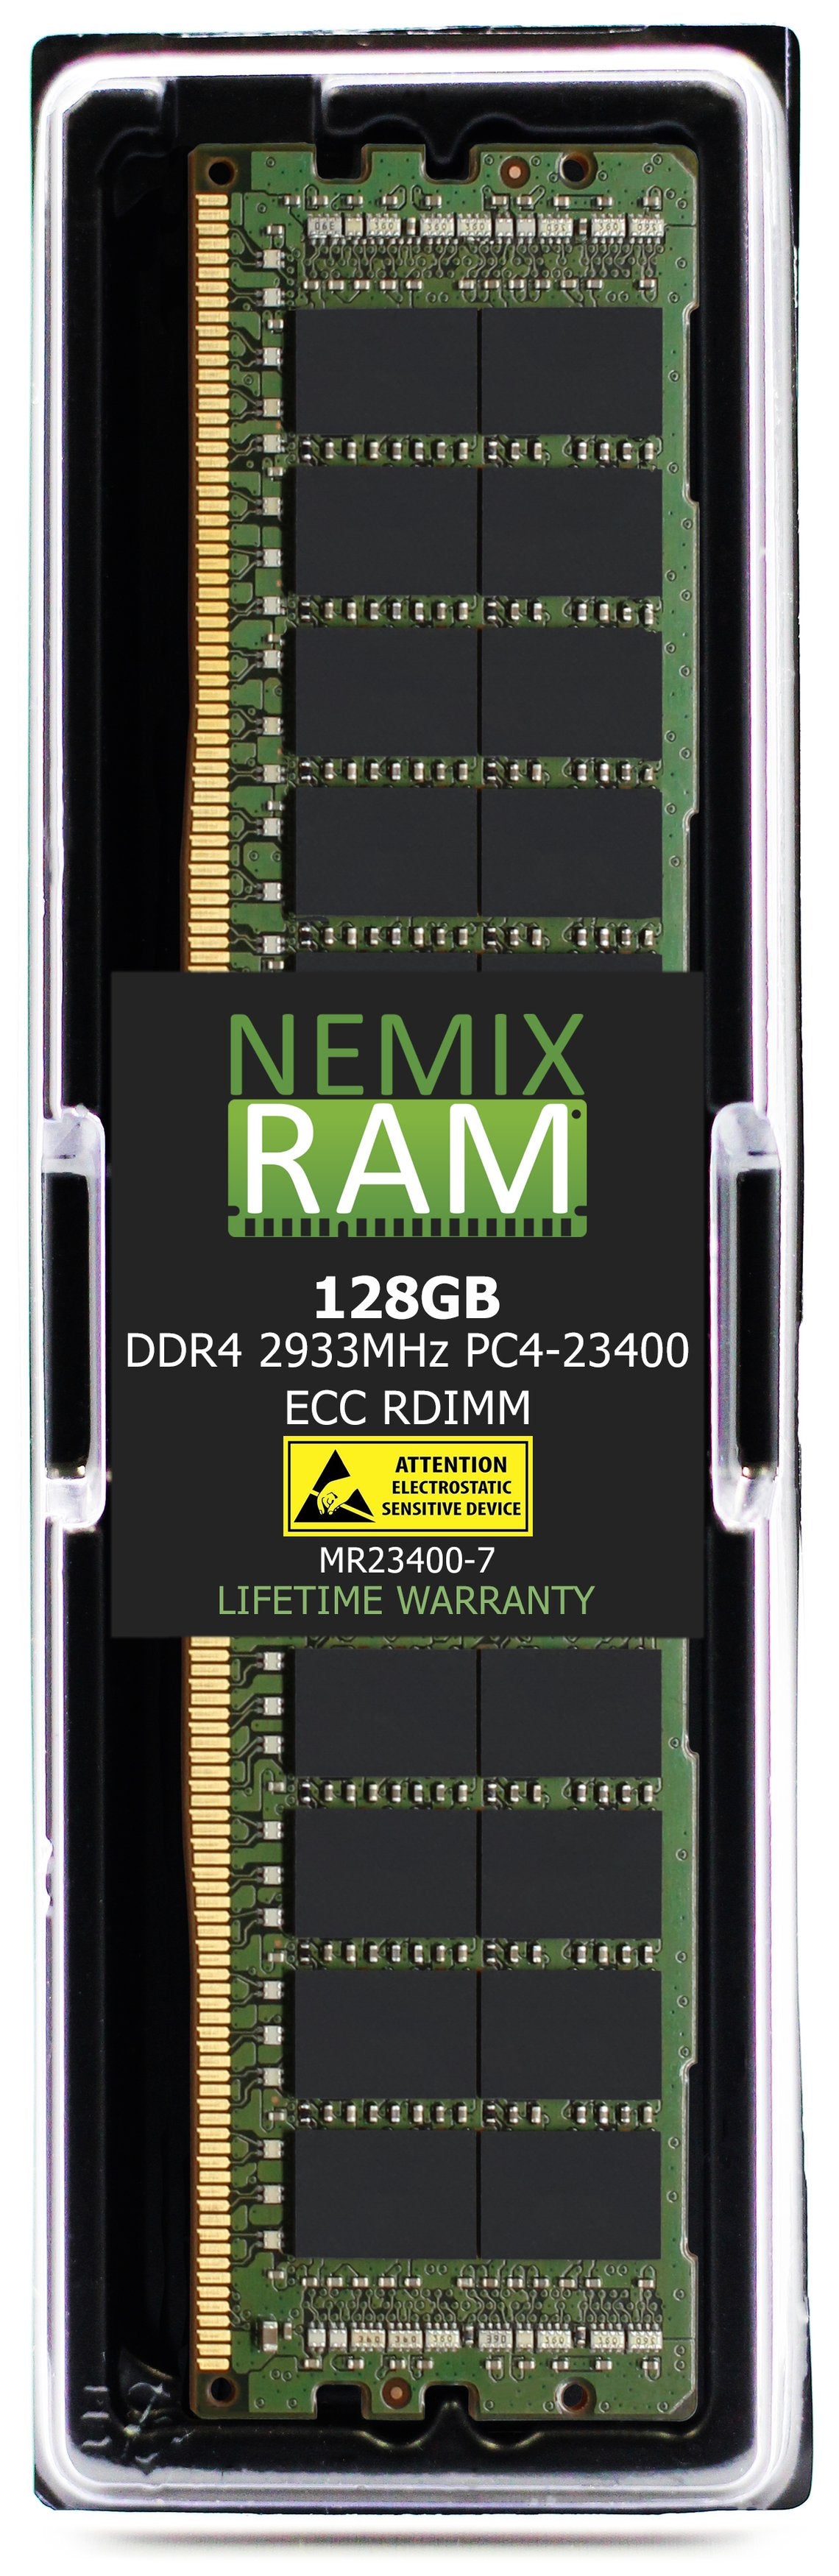 128GB DDR4 2933MHZ PC4-23400 RDIMM Compatible with Supermicro MEM-DR412L-SL01-ER29